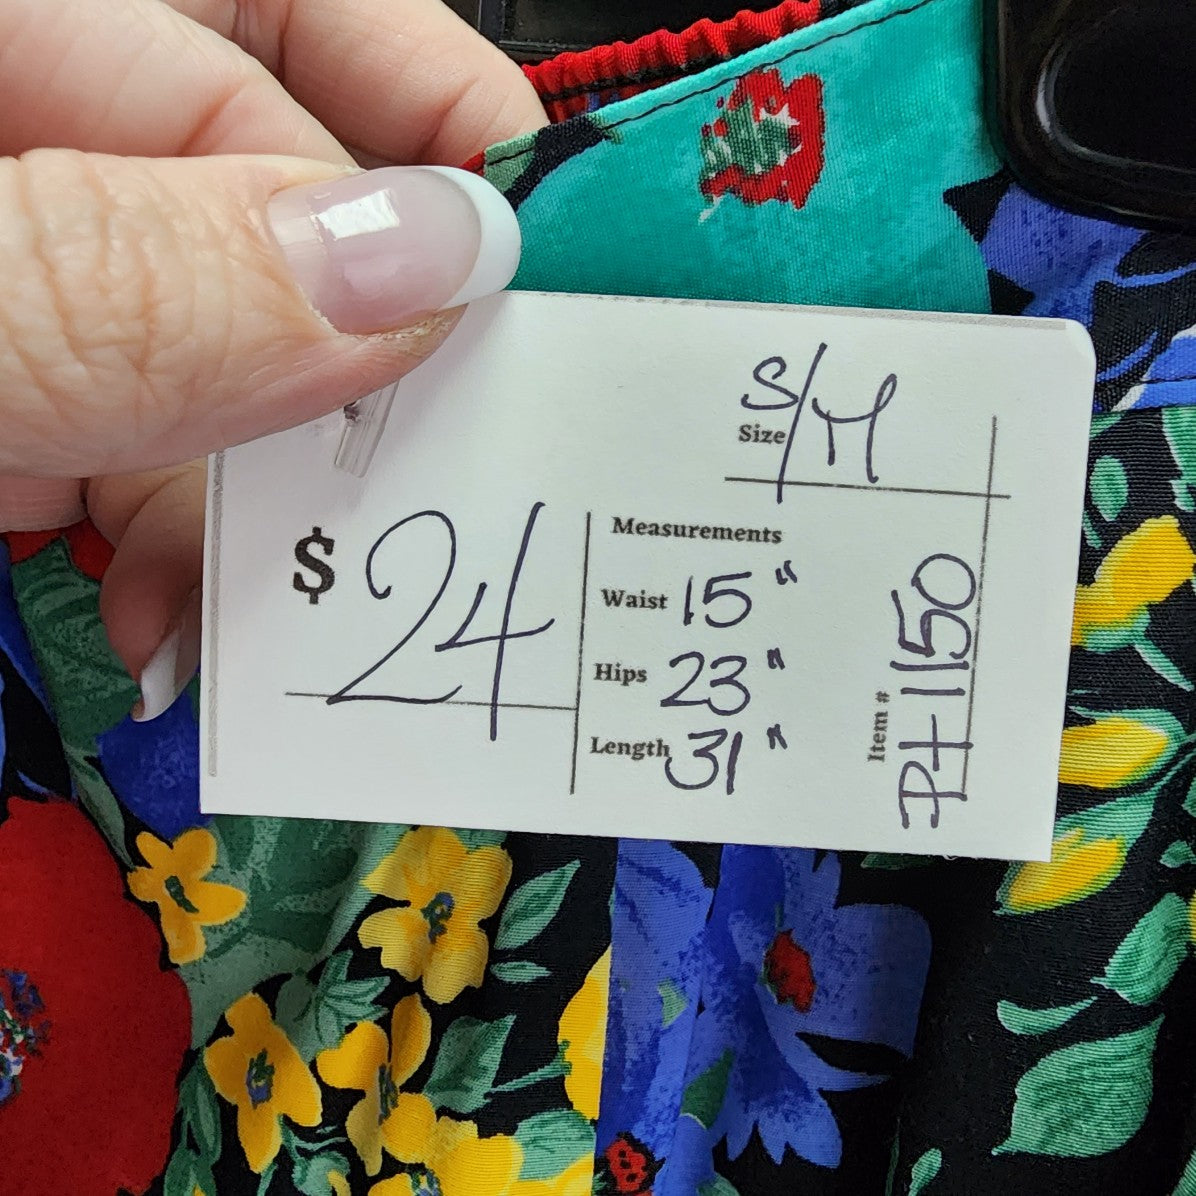 Principles Colorful Floral Midi Skirt Size S/M